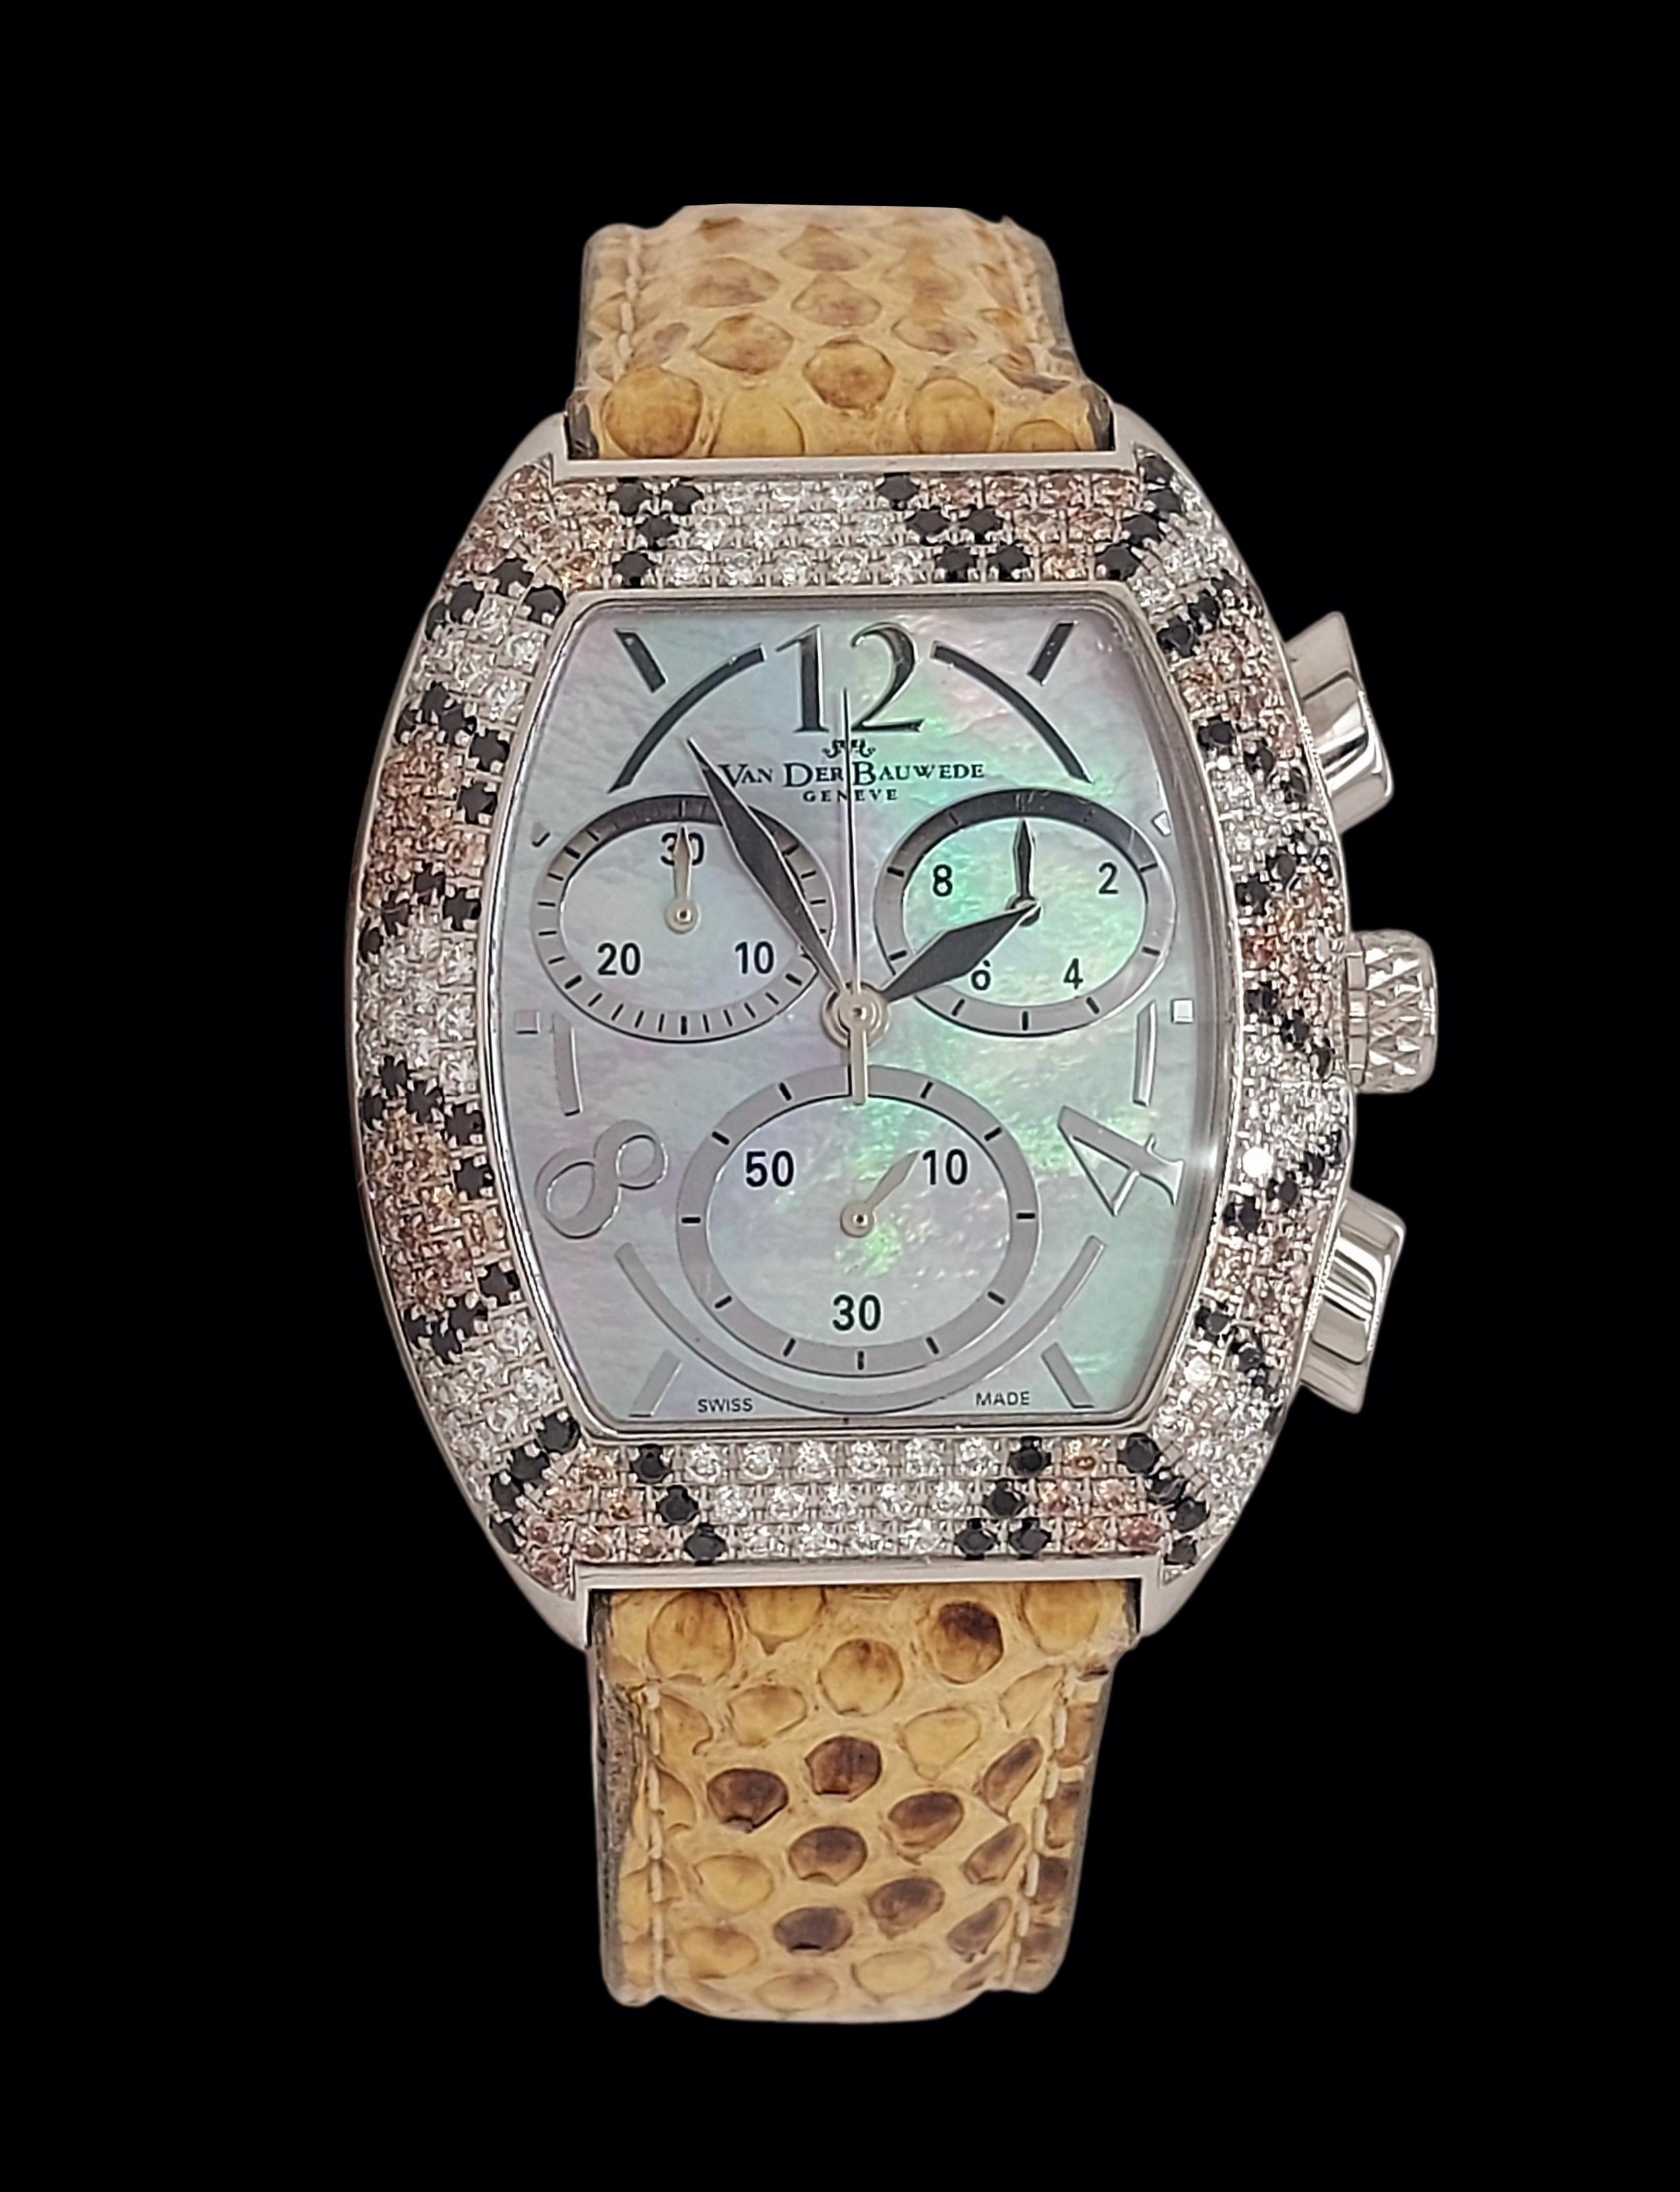 Royal class women's Van der Bauwede Magnum XS Chronograph watch With Black ,Cognac & White Diamonds

Movement: quartz, calibre 65

Functions: hours, minutes, subsidiary seconds, chrono functions

Case: Stainless steel, measurements 33 mm x 37.2 mm,